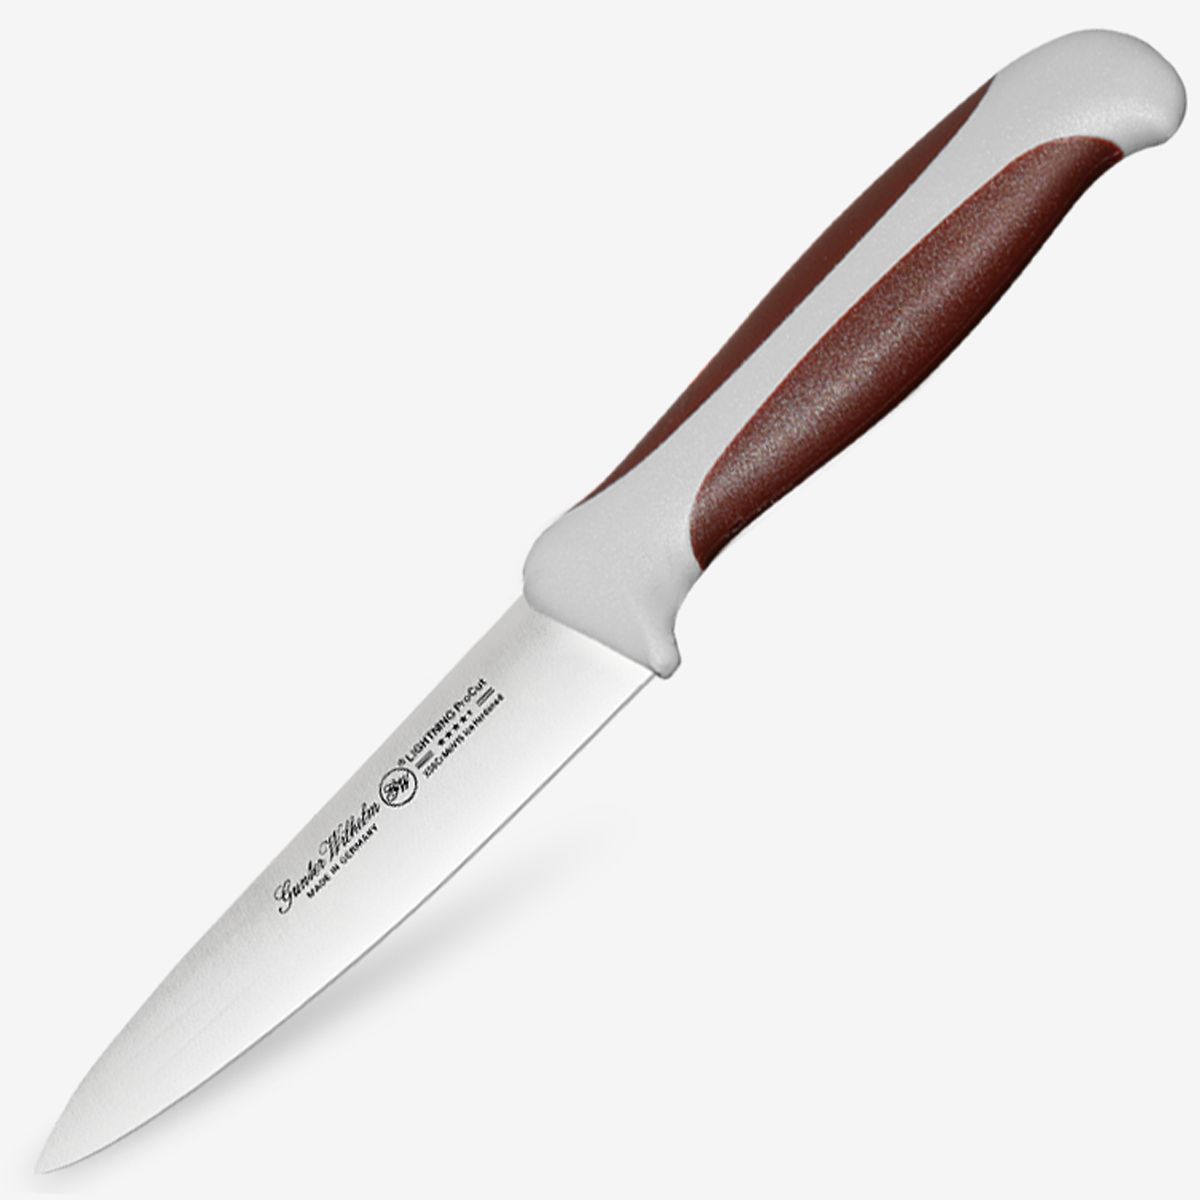 Gunter Wilhelm Thunder Paring Knife, 3.5 Inch | Brown and Grey ABS Handle SKU: 10-111-0135